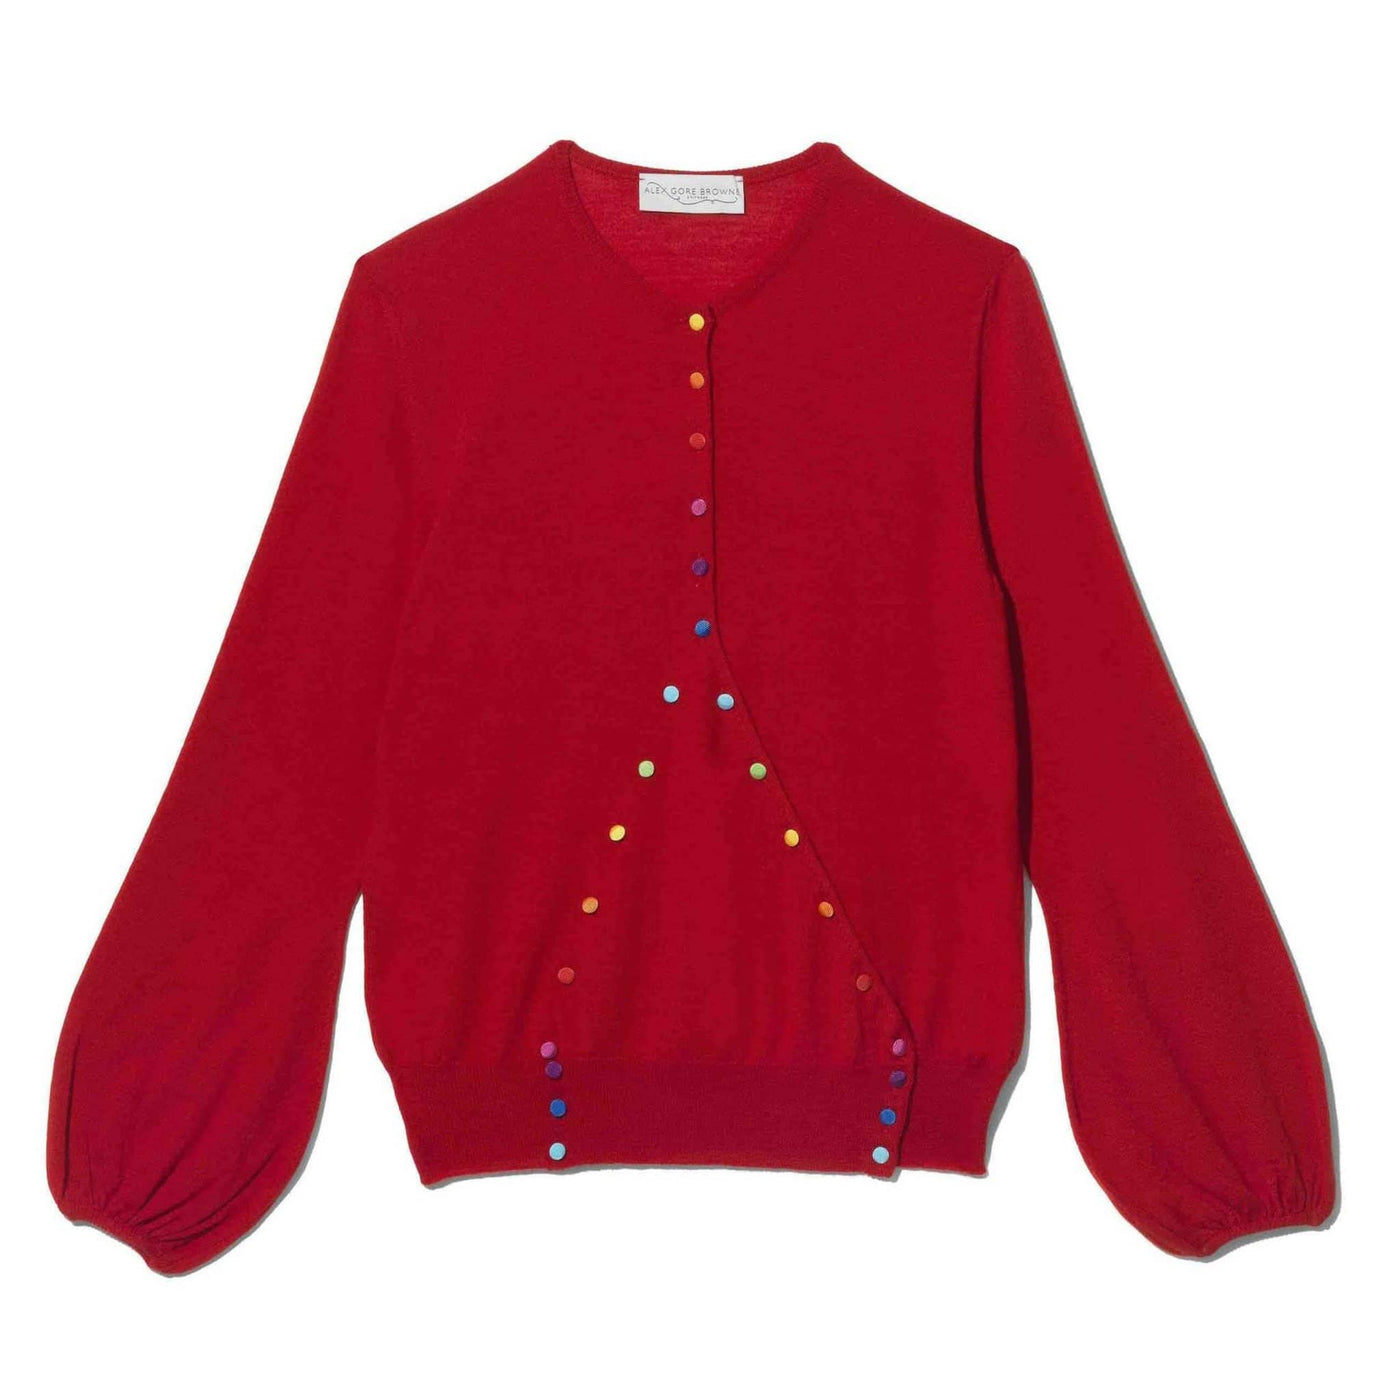 Red Rainbow Criss Cross sweater